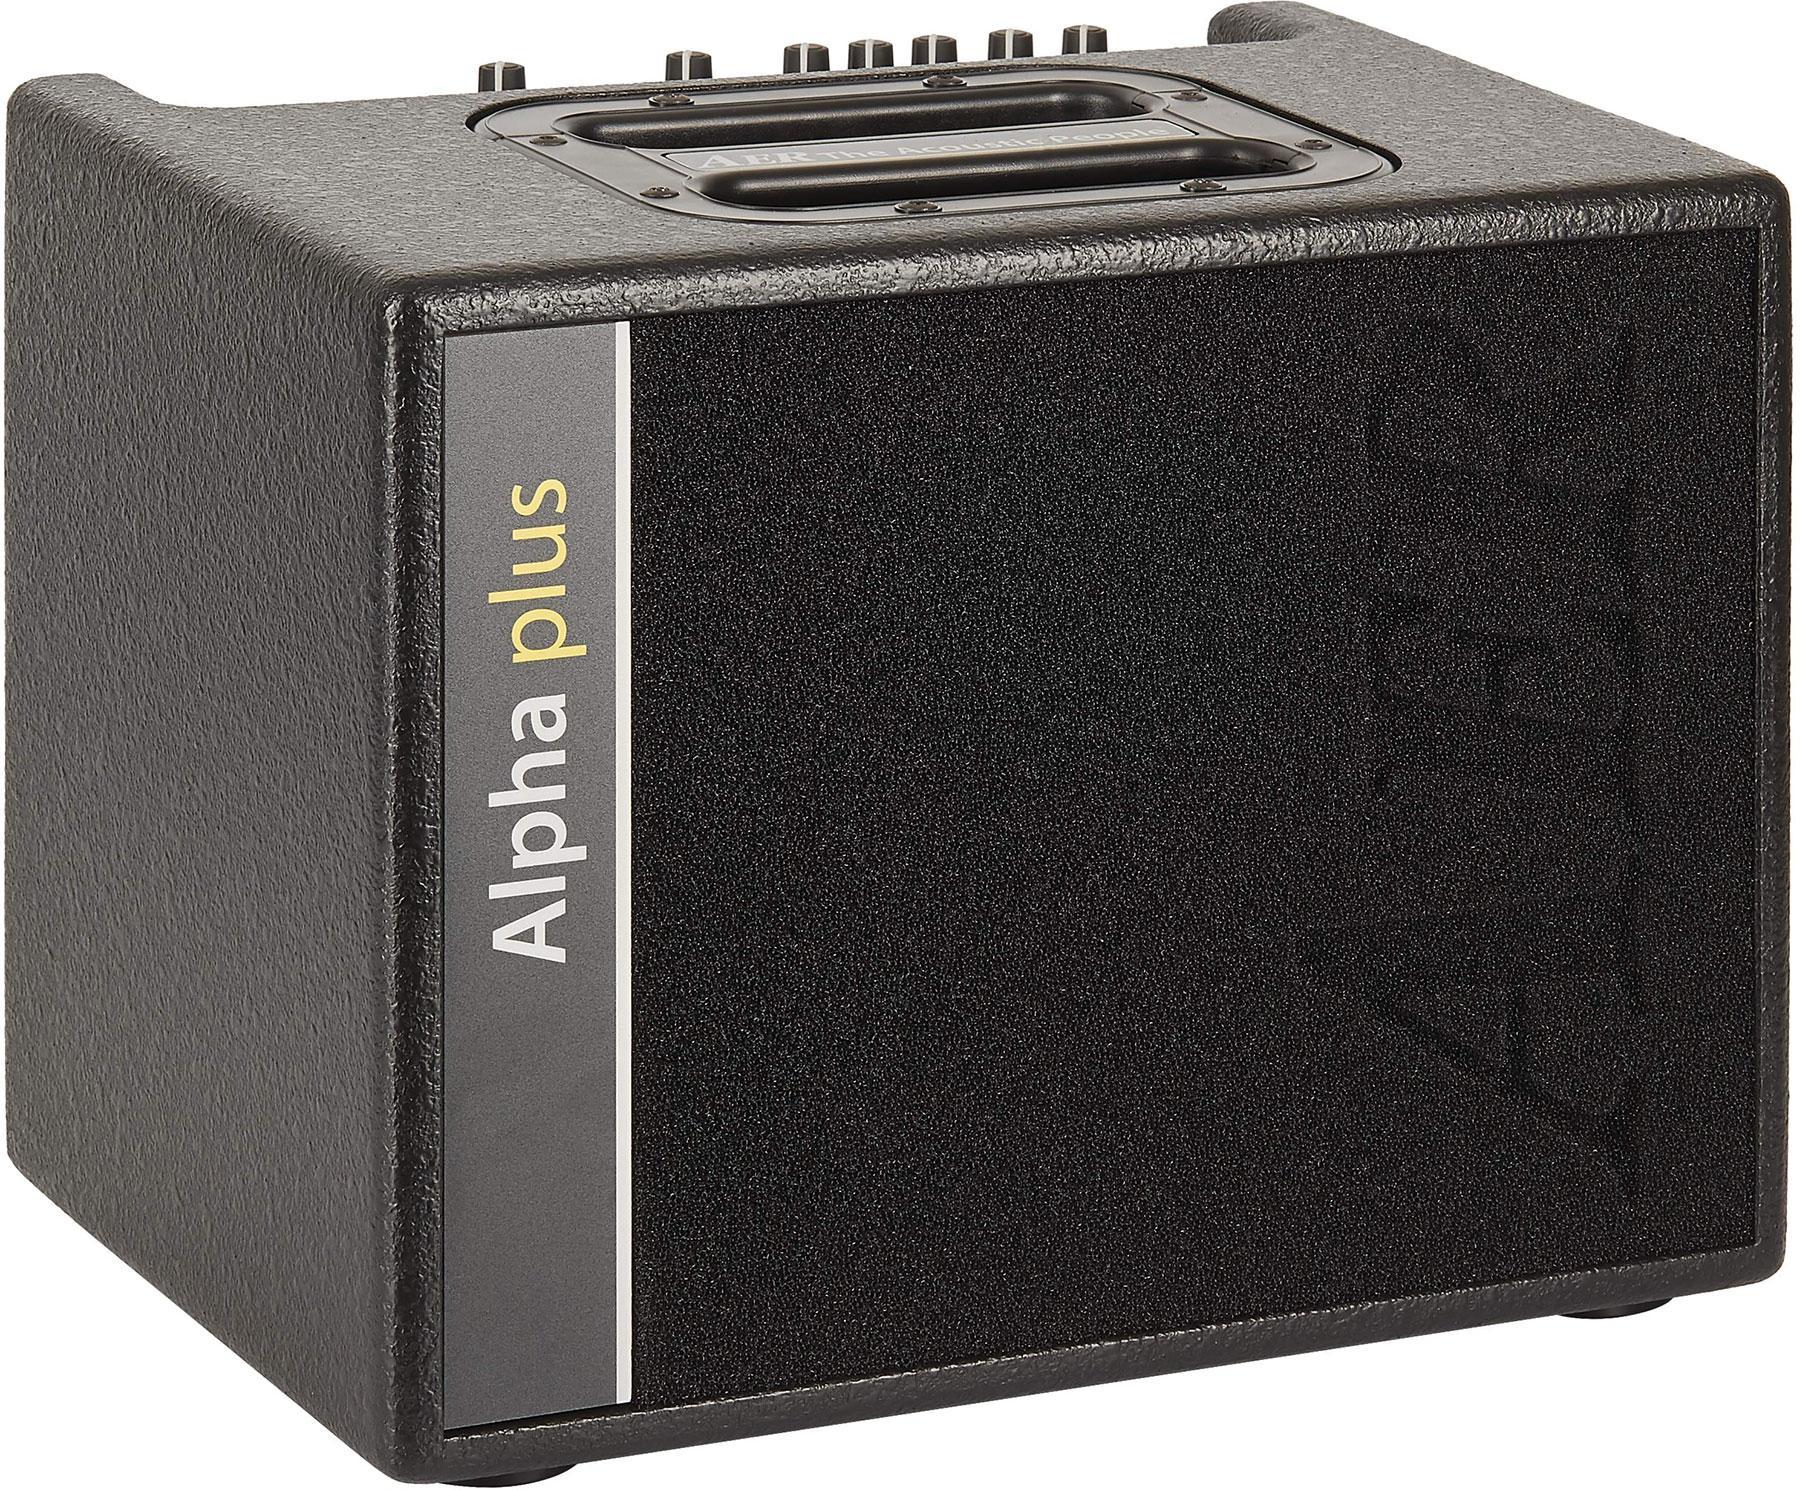 Combo amplificador acústico Aer Alpha Plus